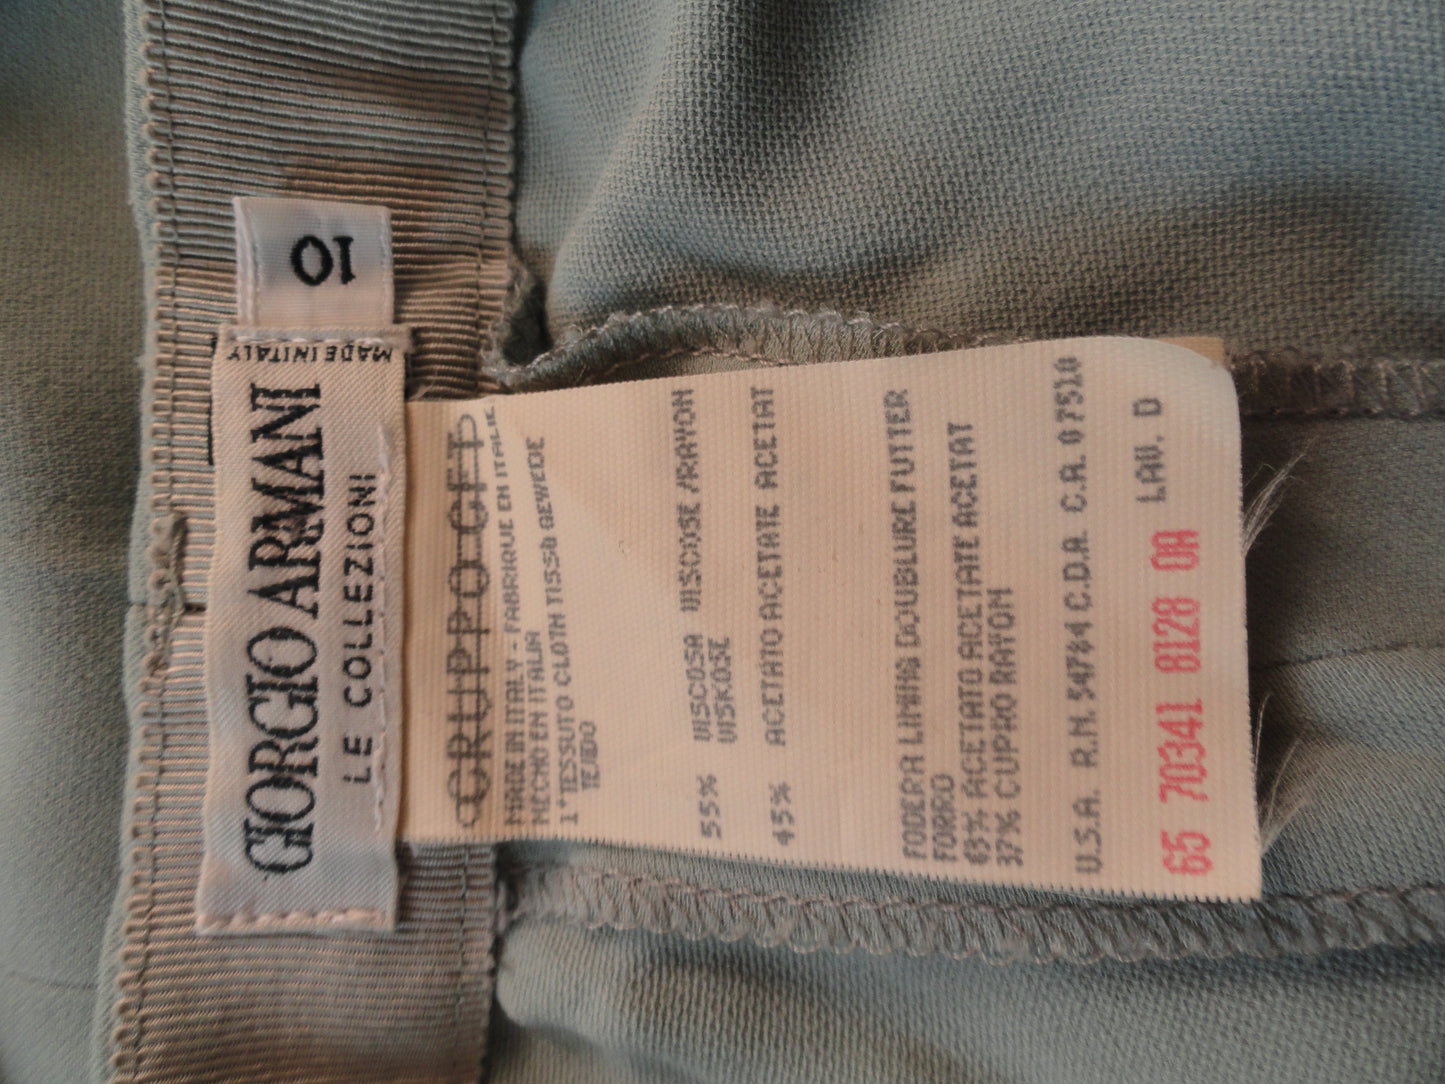 Giorgio Armani 70's Light Aqua Dress Pants with Pleats Size 10 SKU 000134